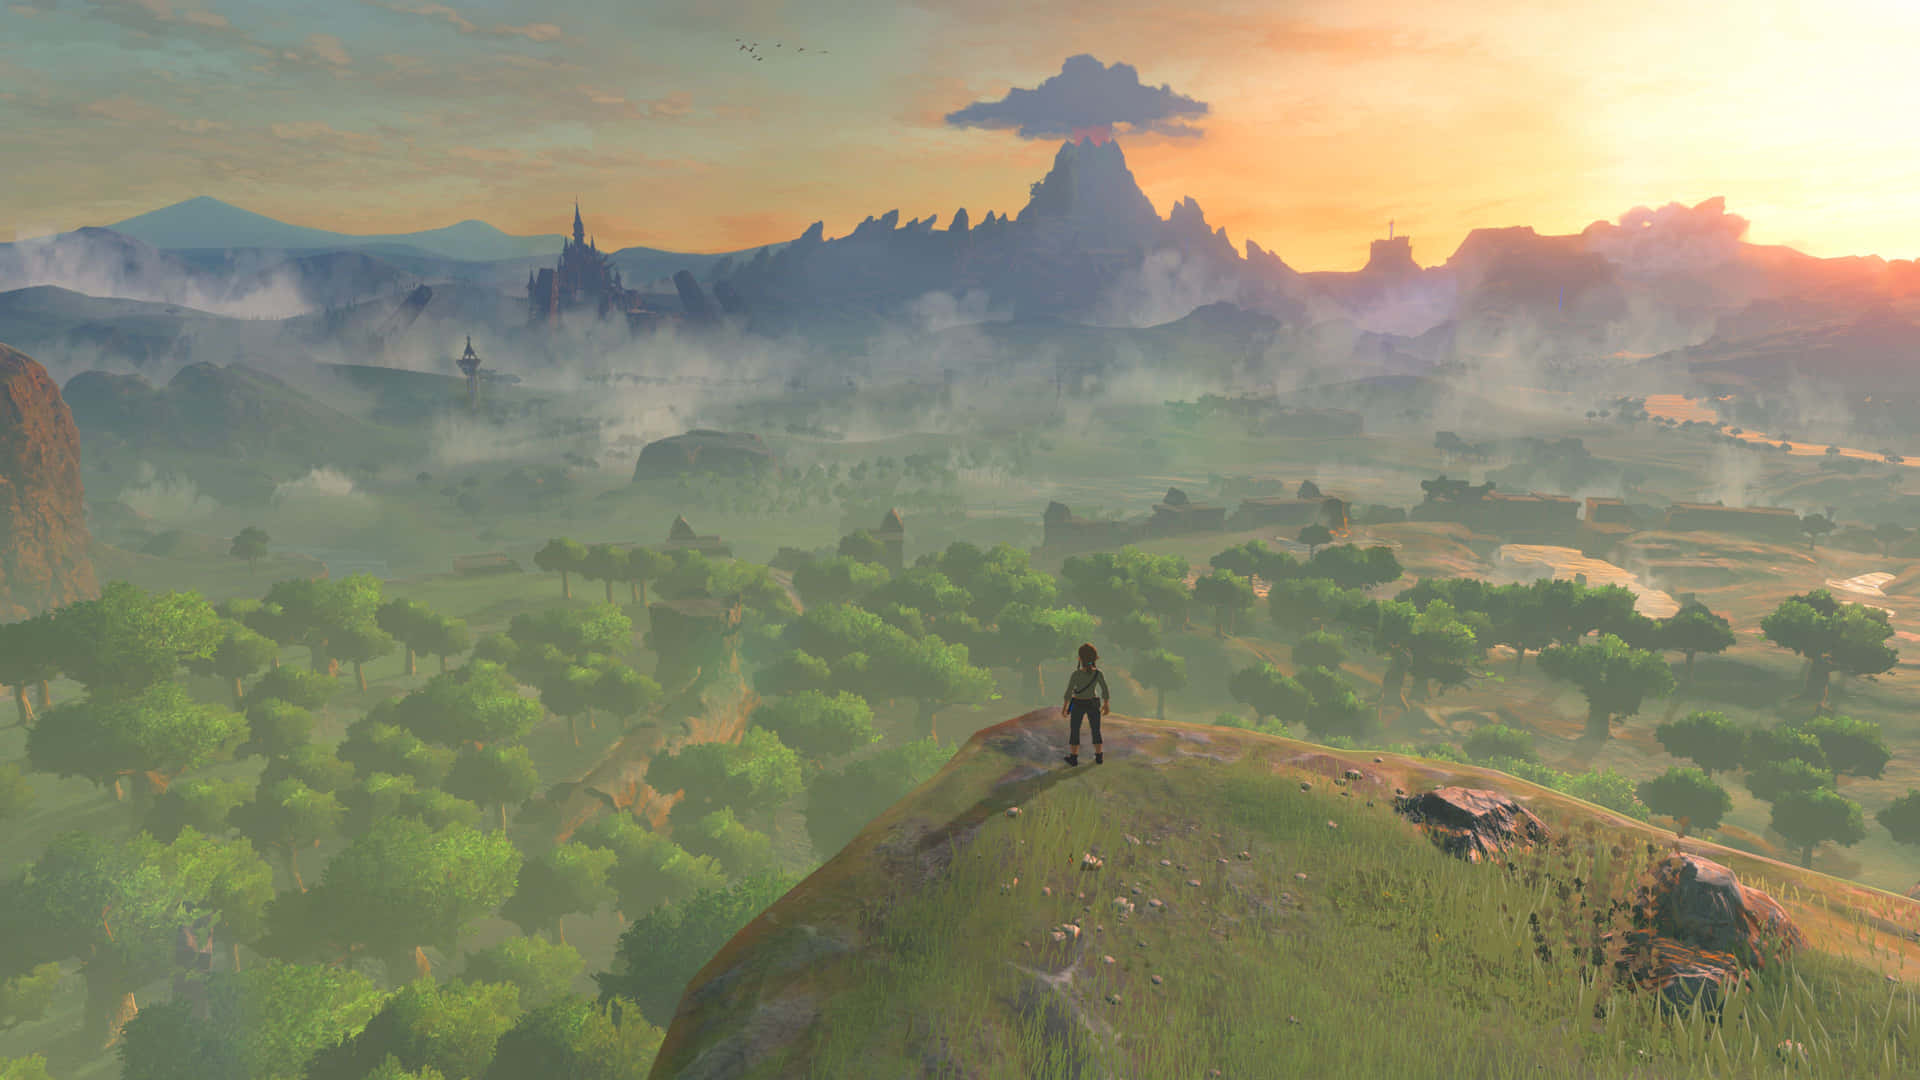 Serene sunset over Hyrule in The Legend of Zelda: Breath of the Wild